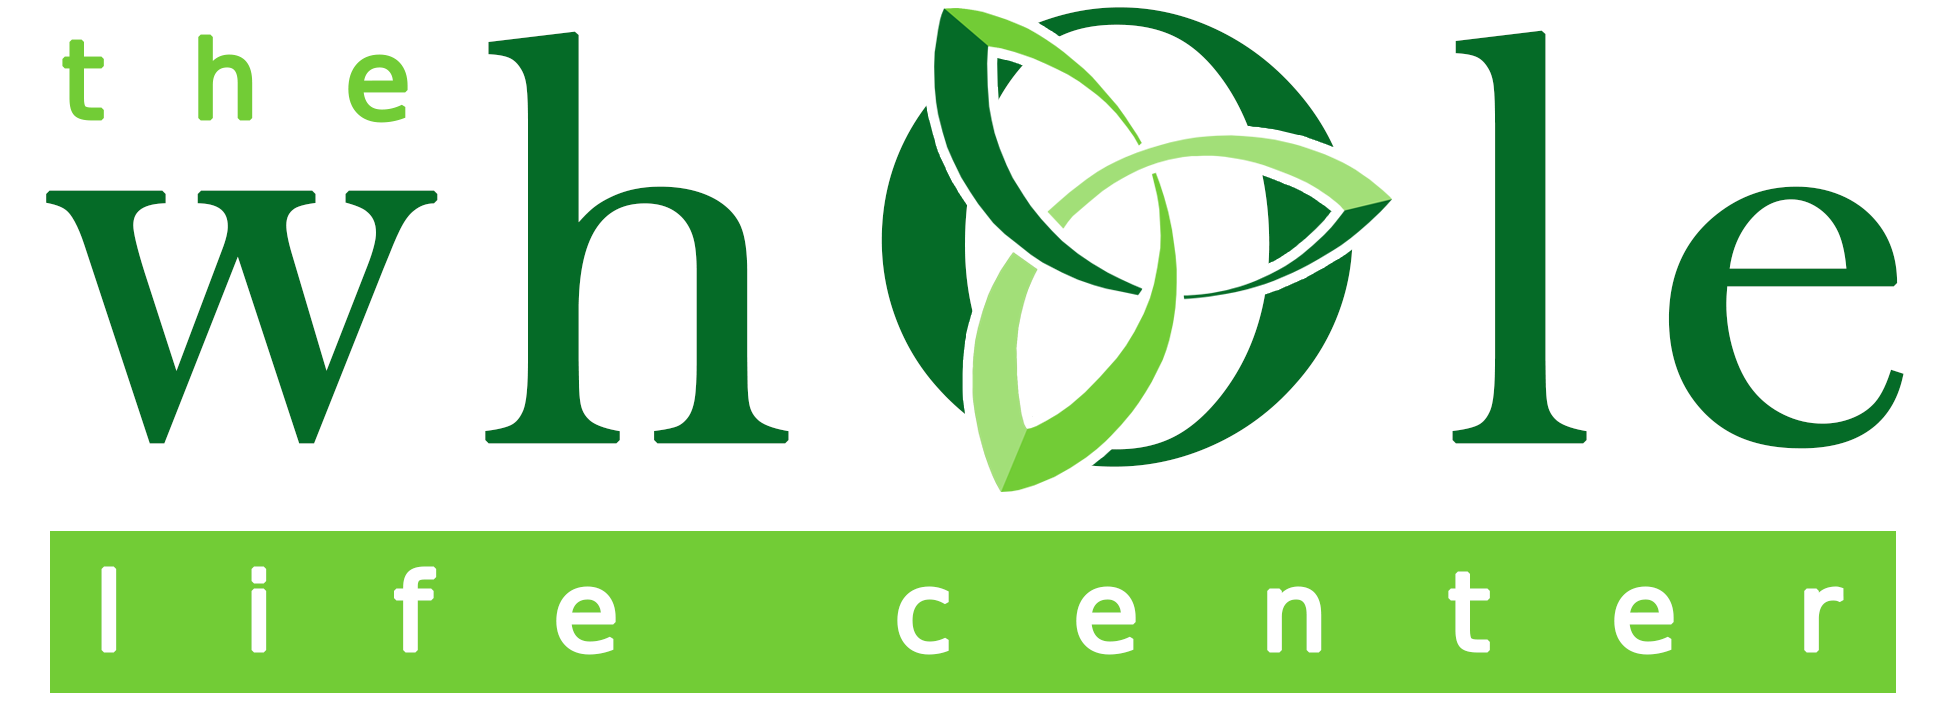 Whole-Life-Center-Logo